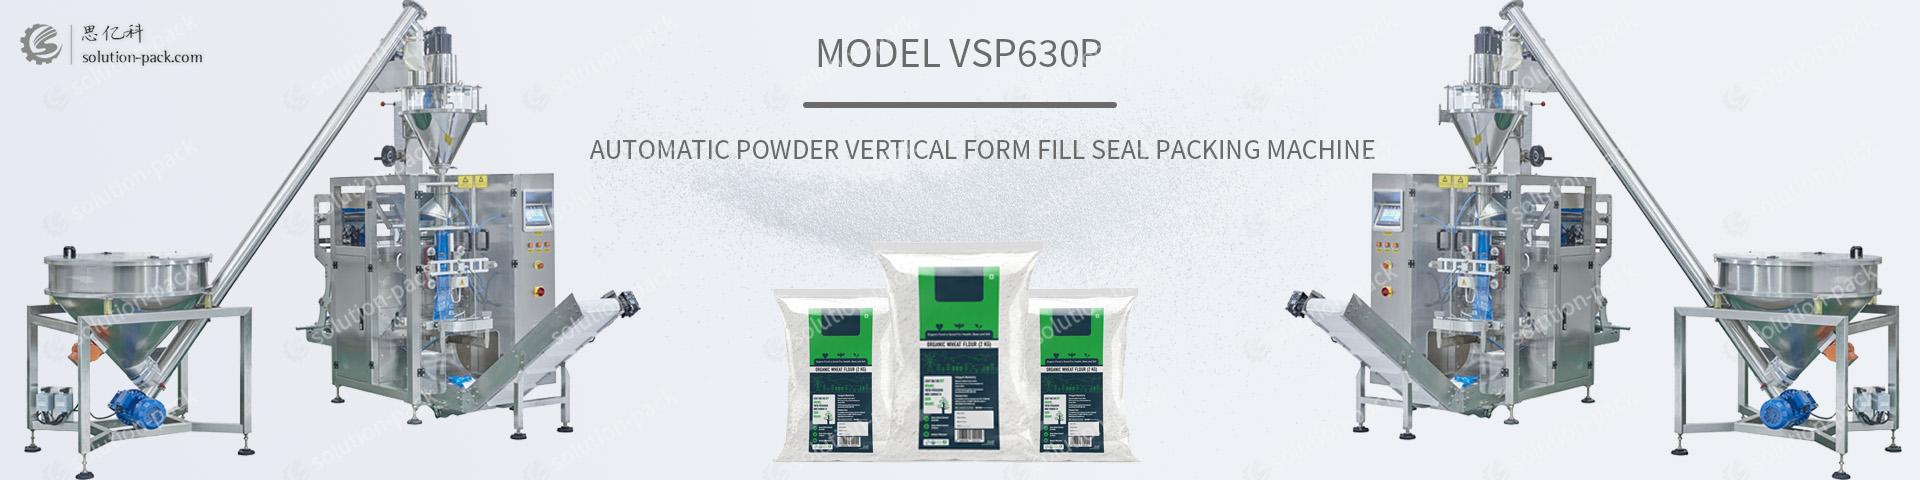 Solution-Pack | VSP630P Automatic Powder Vertical Packaging Machine Solution | Powder Vertical Form Fill Seal Packing Machine | vffs packaging machine | powder packing machine unit